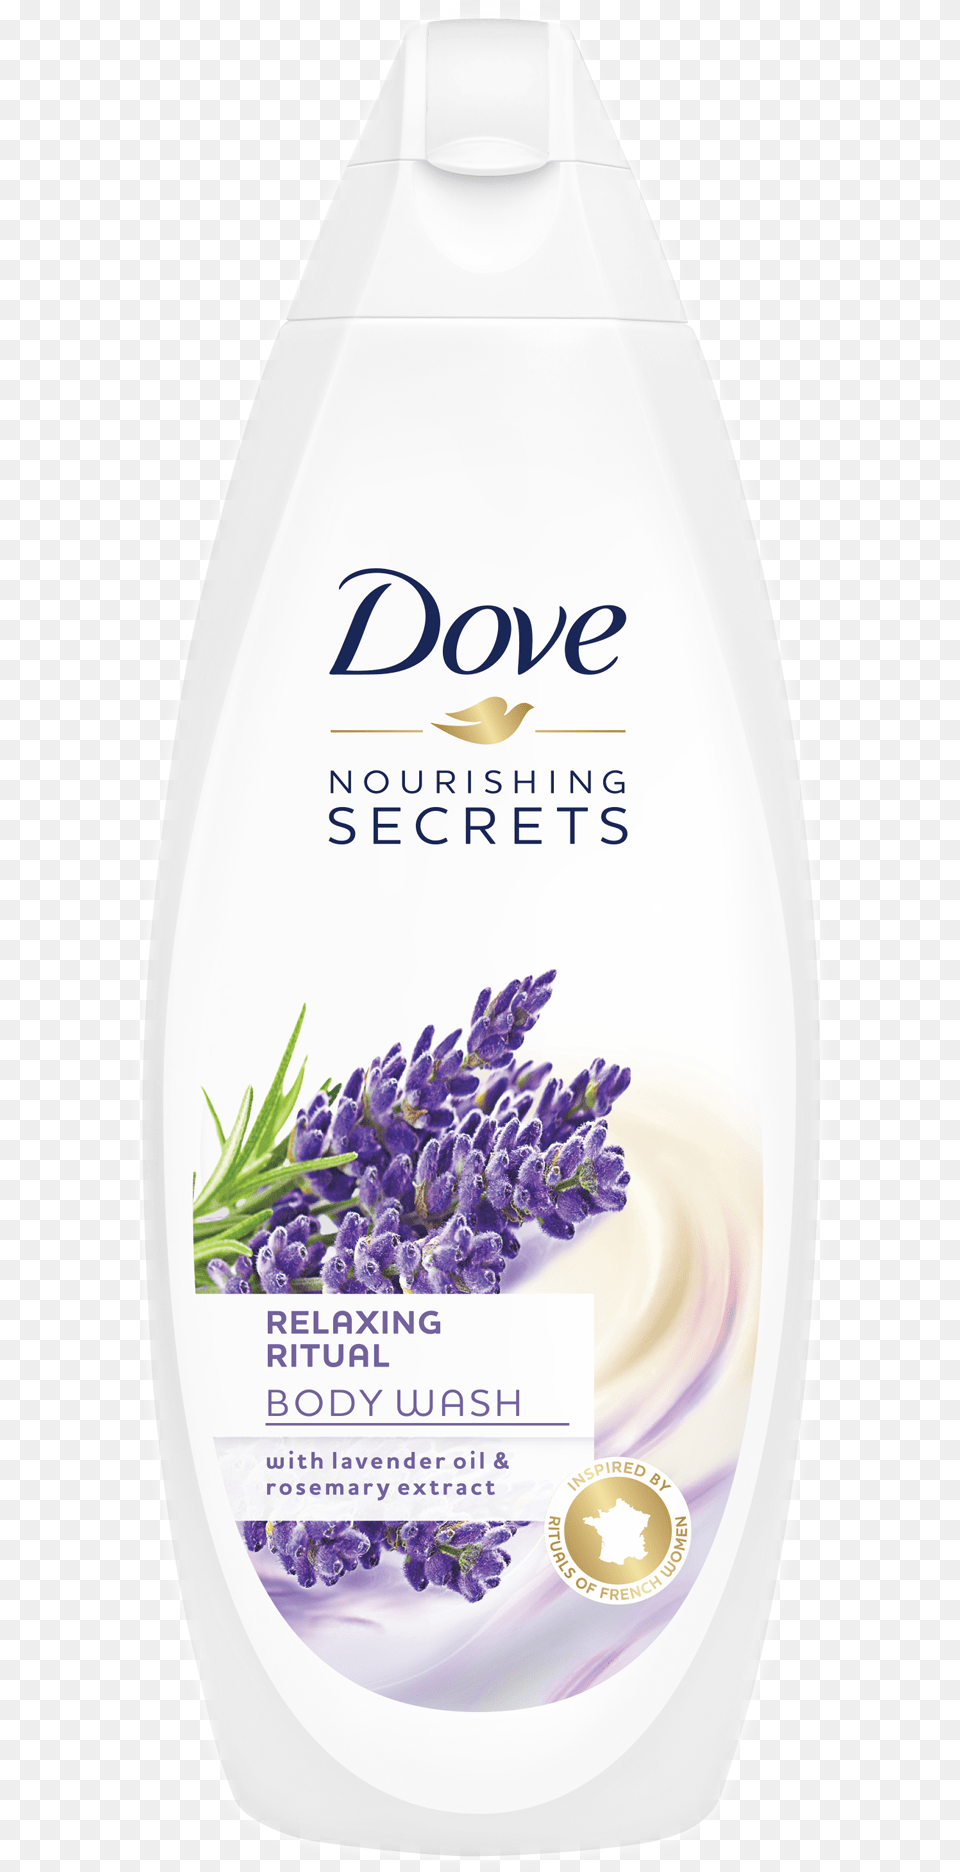 Dove Relaxing Ritual Body Wash Dove Nourishing Secrets Relaxing Body Wash, Flower, Plant, Lavender, Bottle Png Image